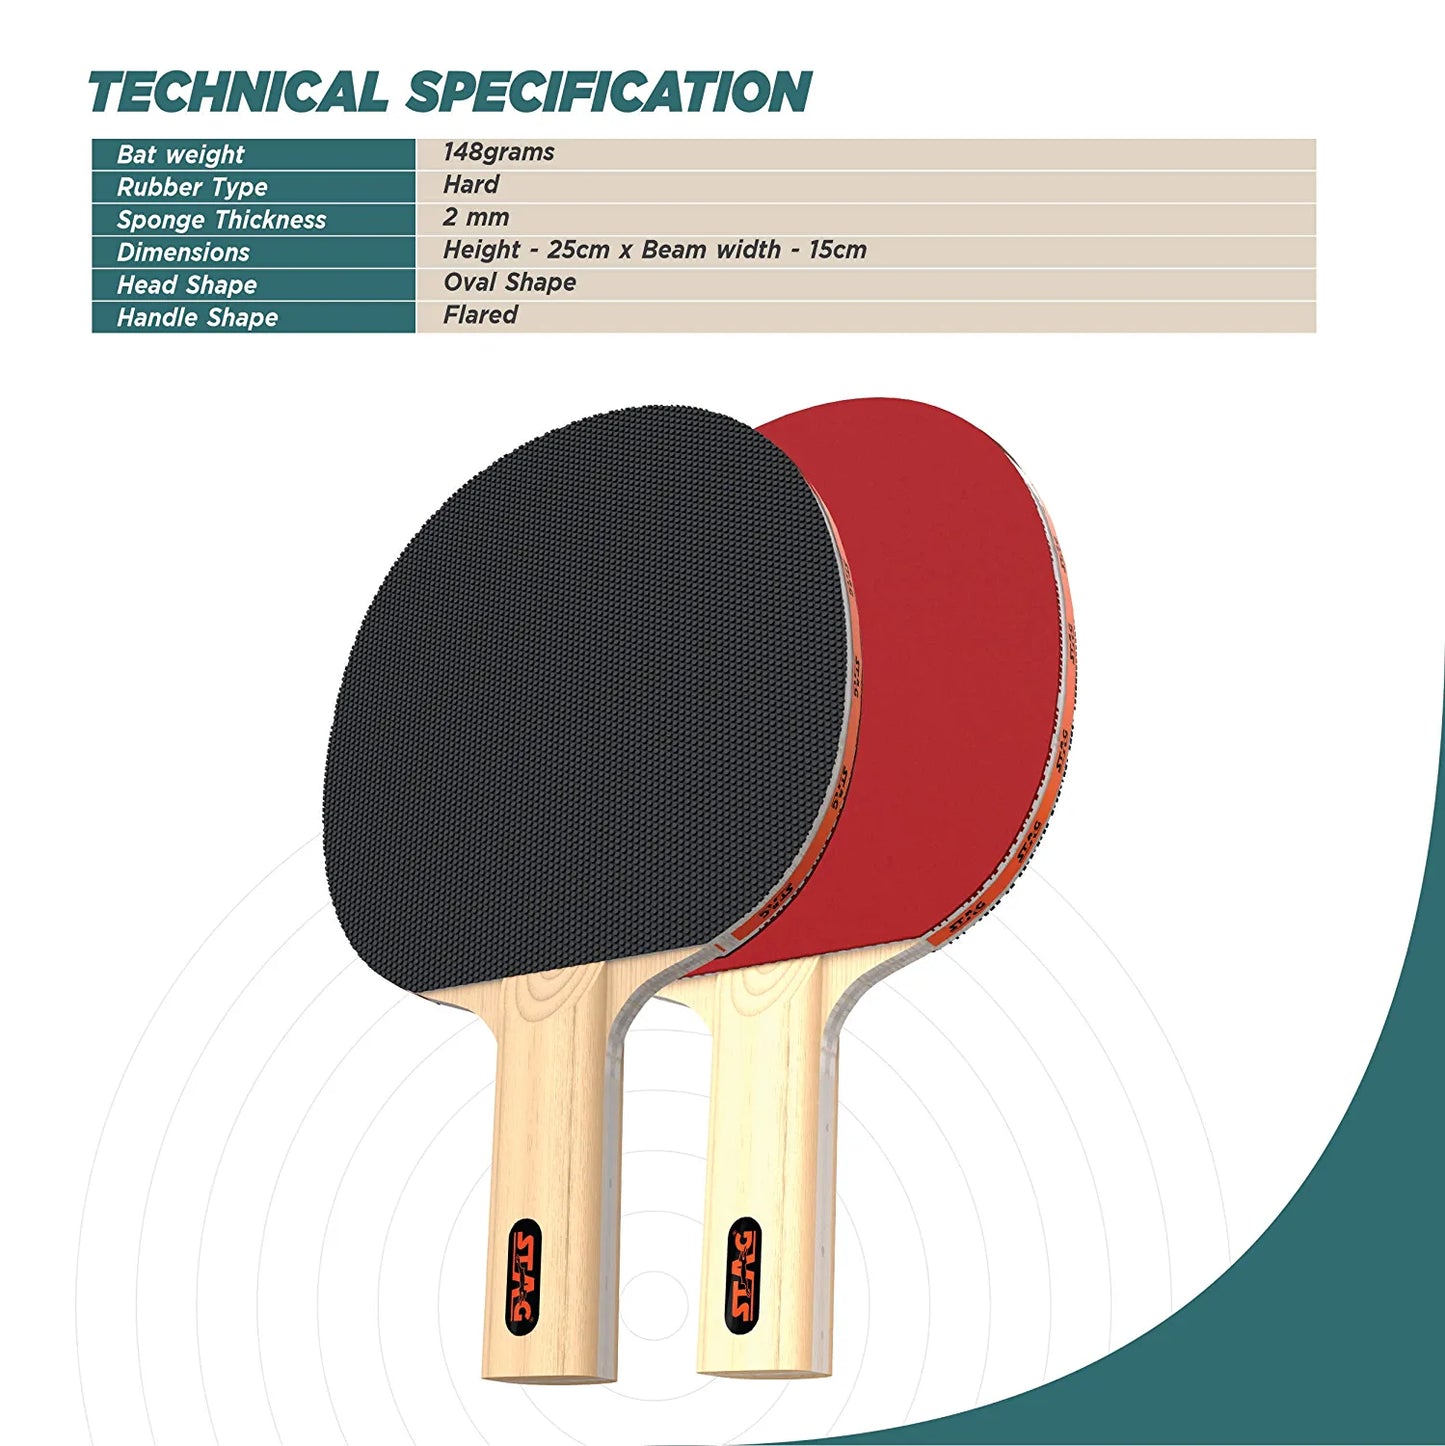 Stag 1 Star Table Tennis Play Set (2 Bats and 3 Balls) - Best Price online Prokicksports.com